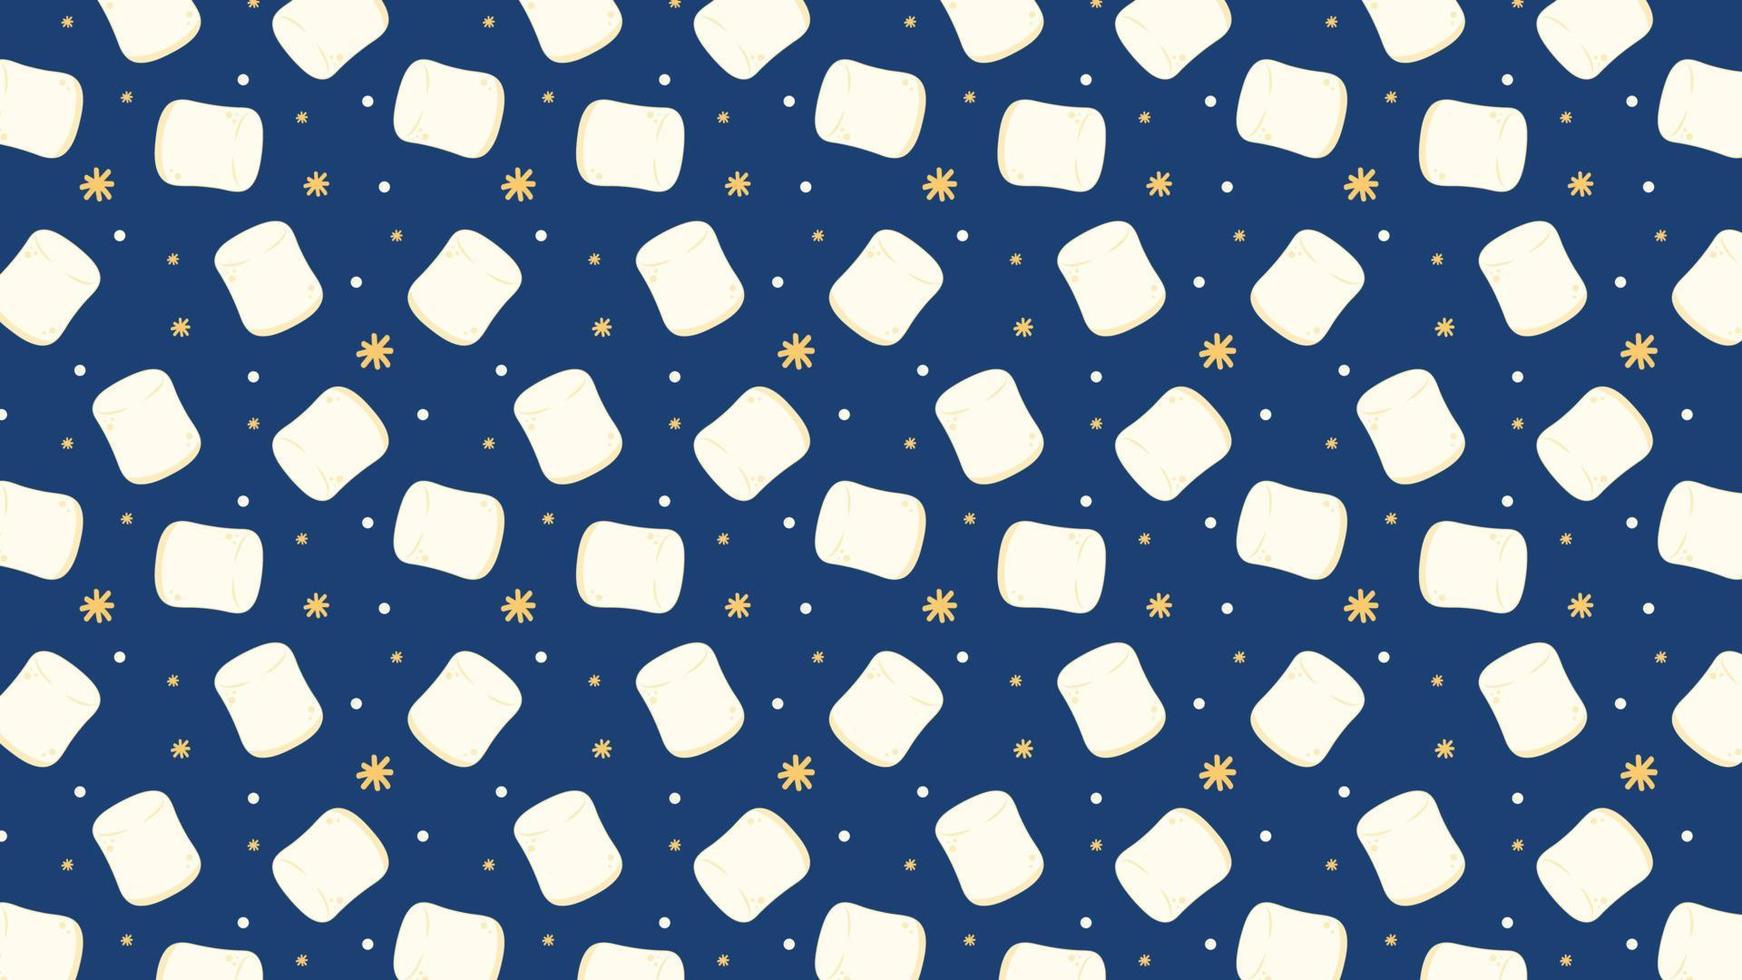 Marshmallow pattern wallpaper. background. marshmallow vector. vector